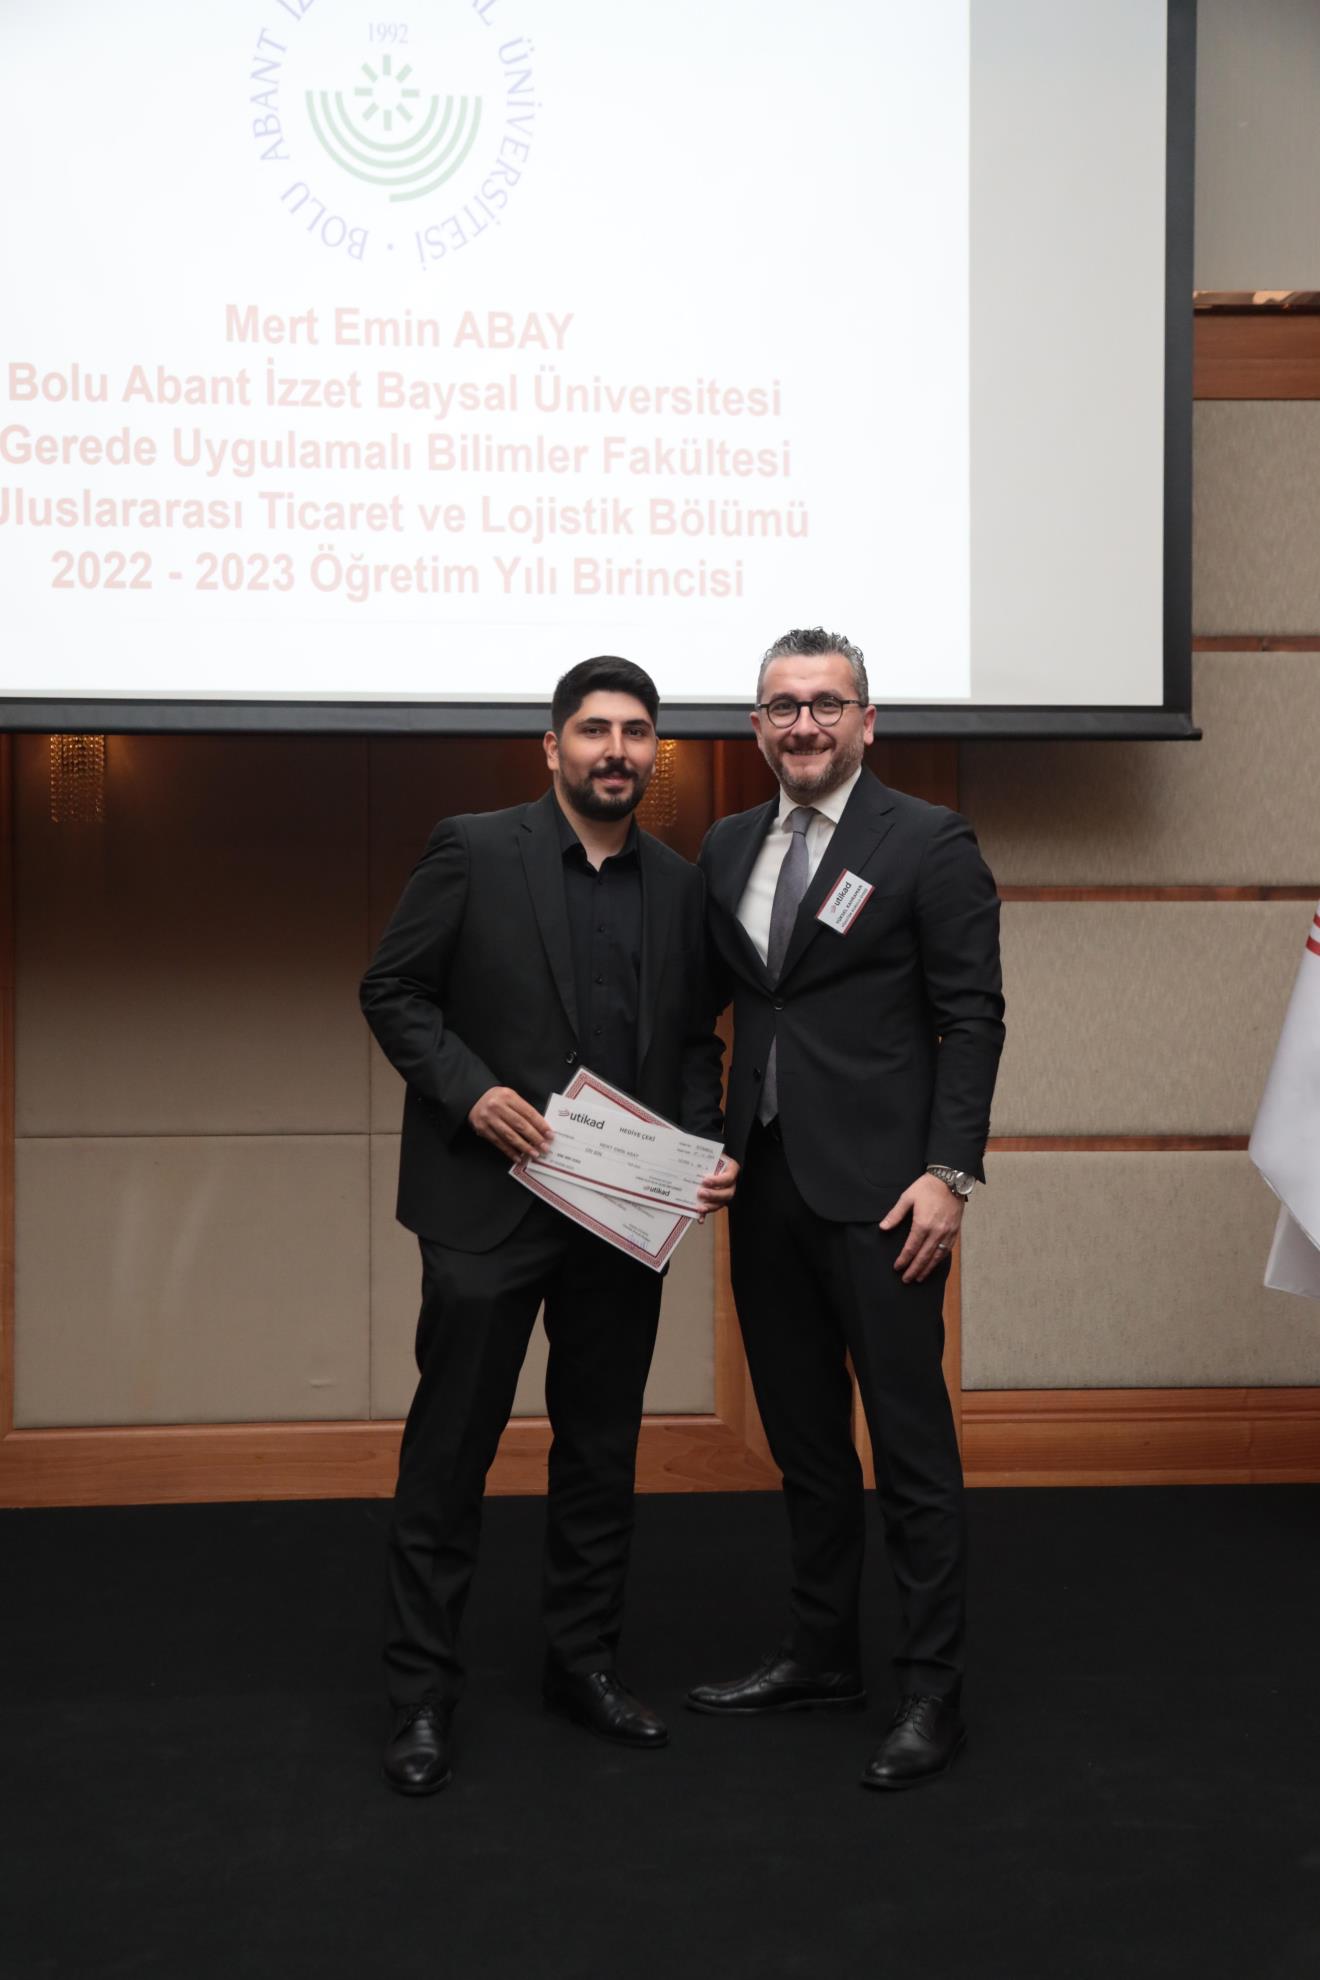 Ahmet Kartal Achievement Awards